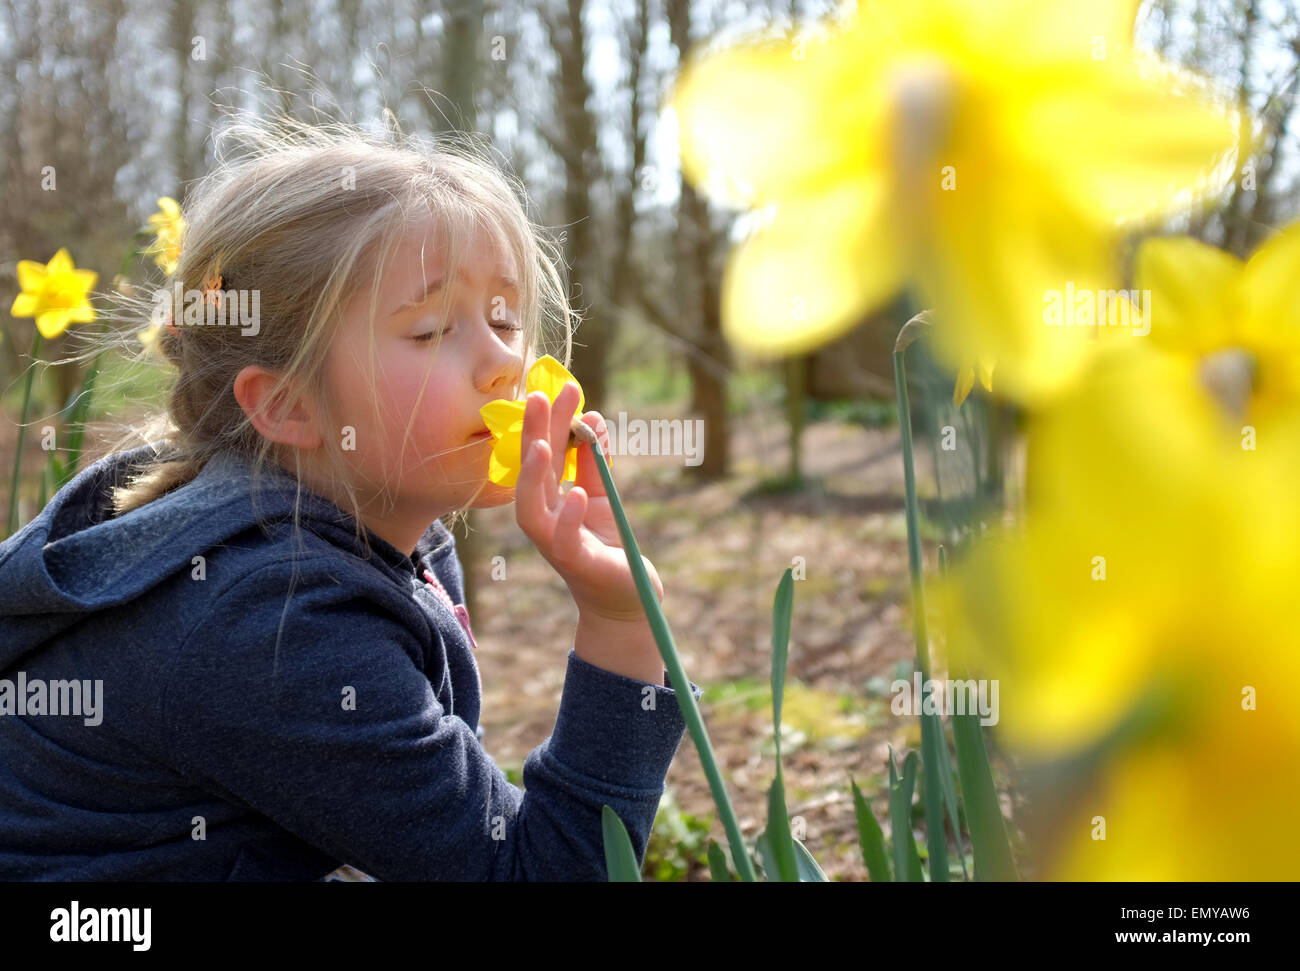 Young Girl smelling flowers jonquilles au printemps Banque D'Images